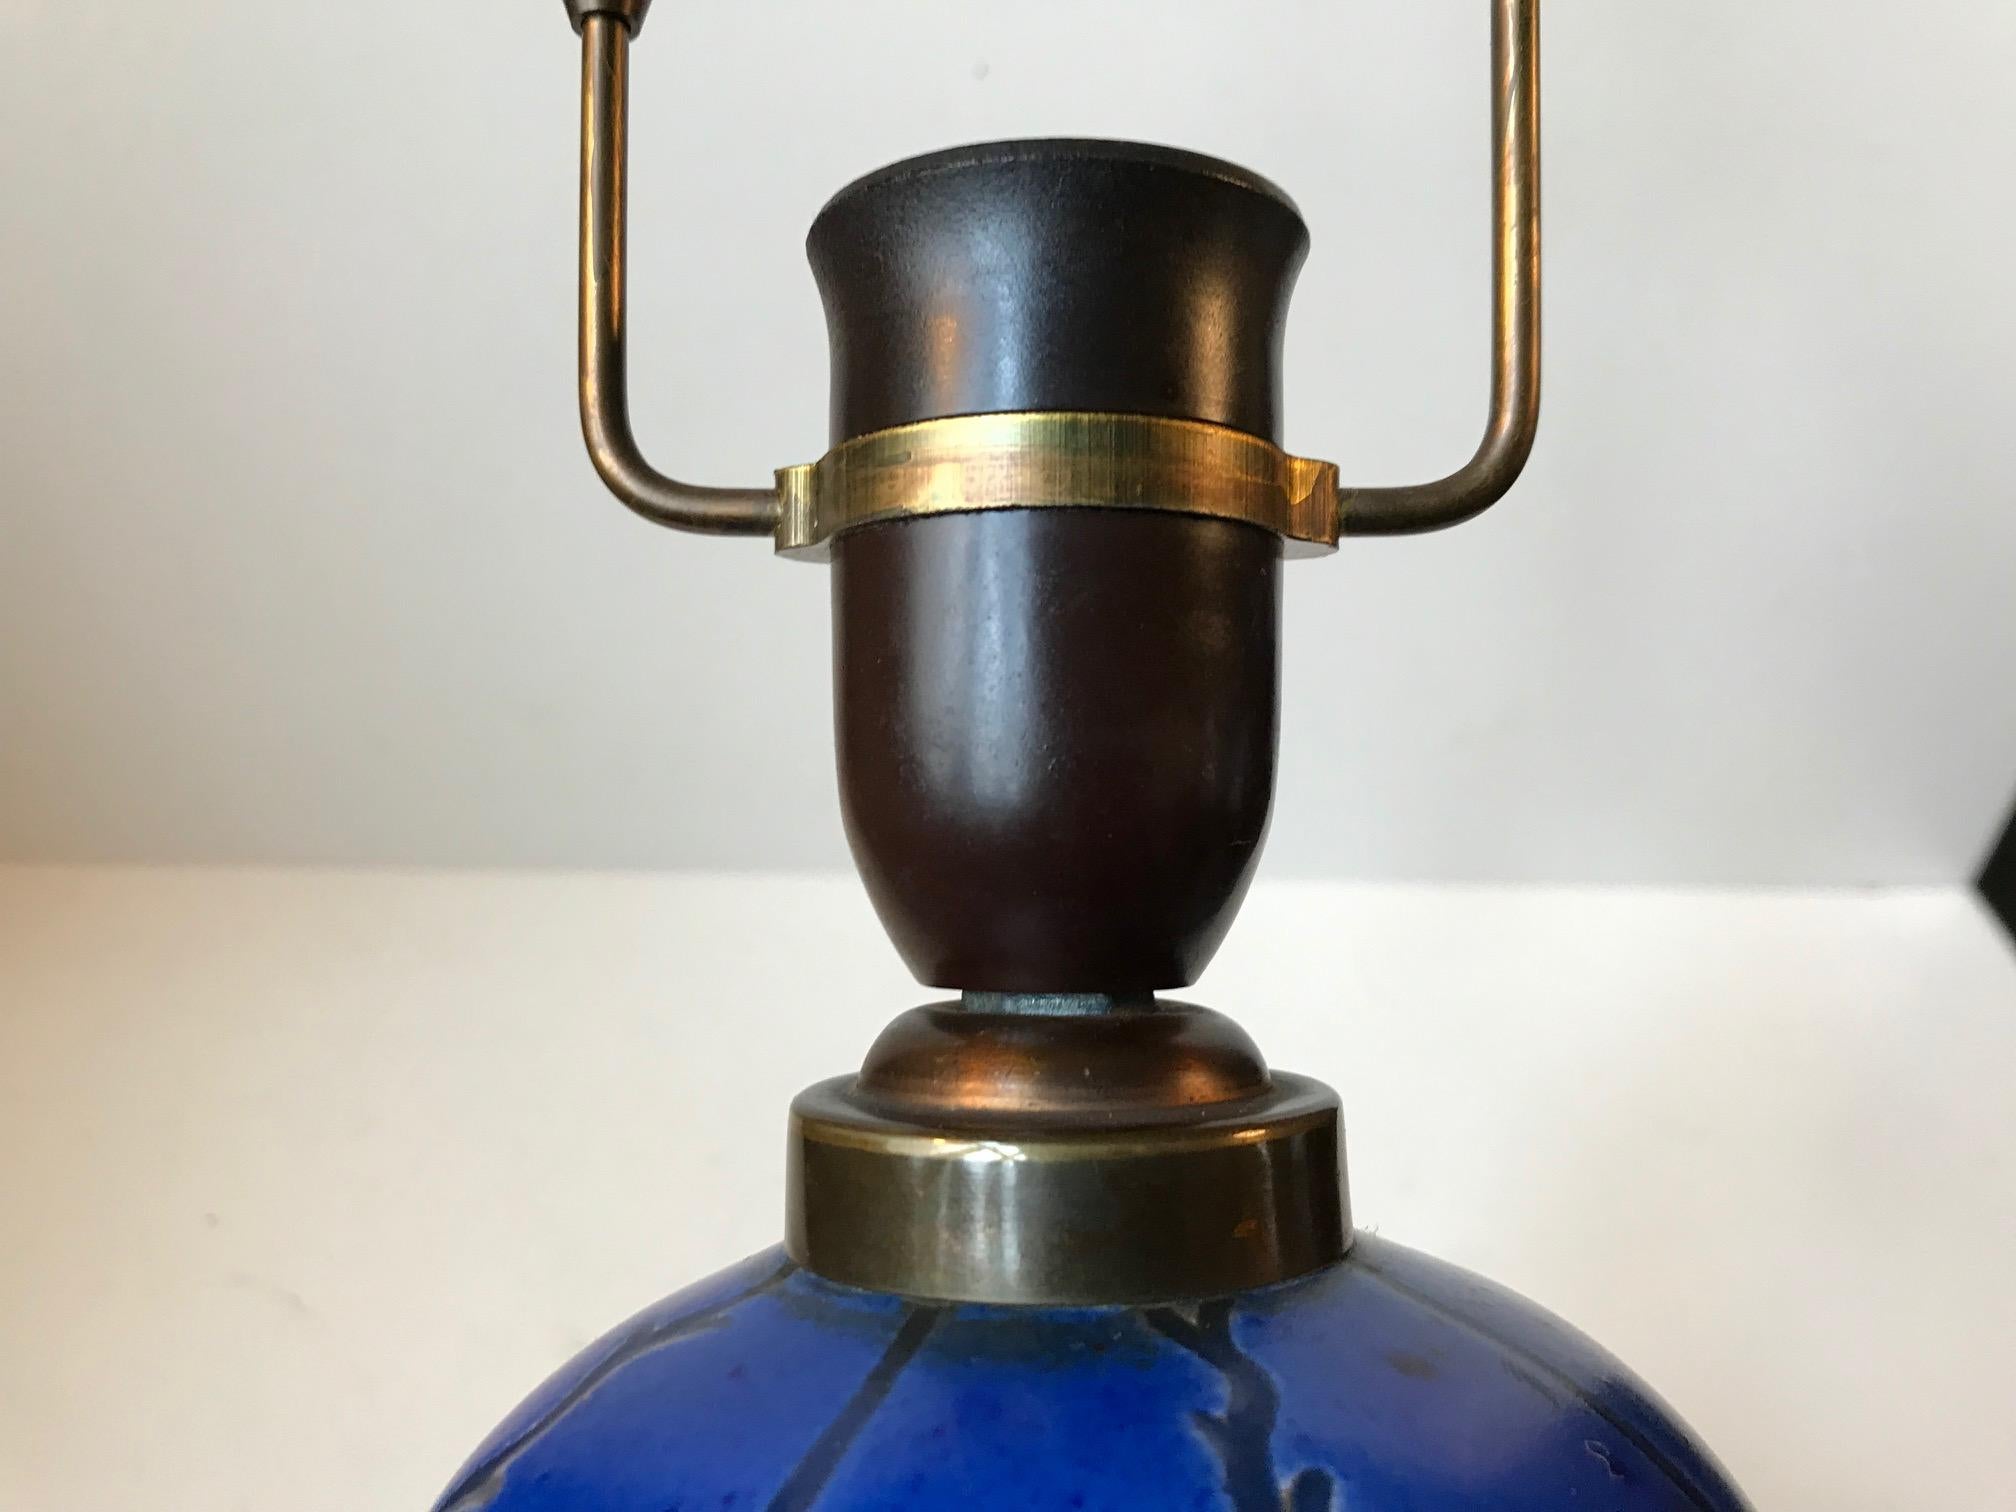 Glazed Blue Ceramic Art Deco Table Lamp by Søholm, Denmark, circa 1940 For Sale